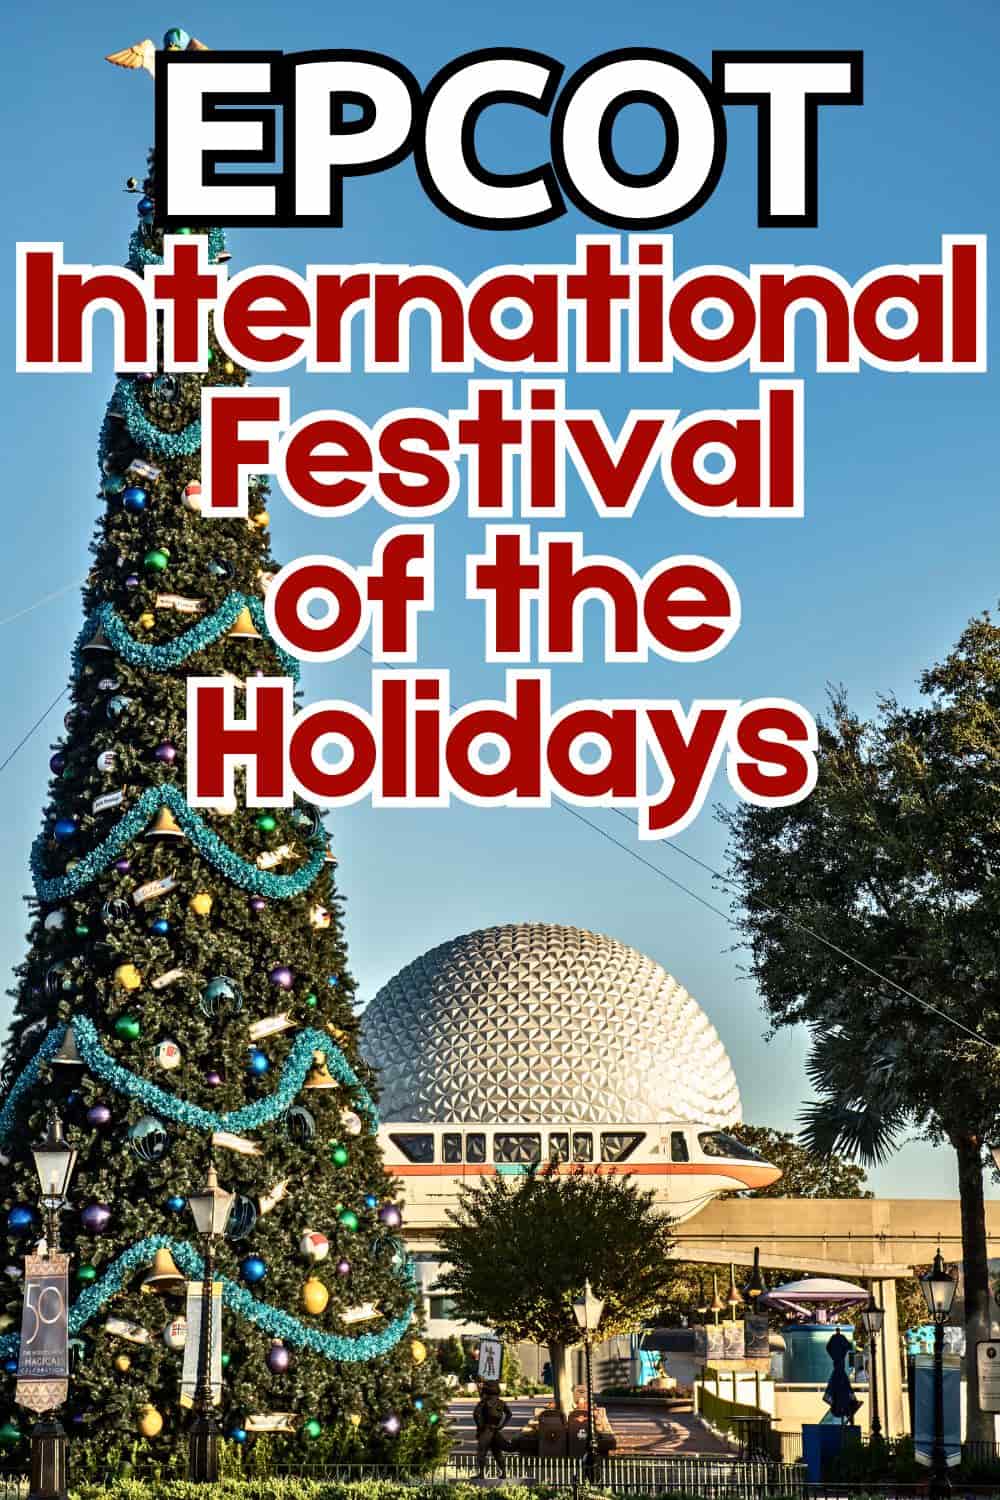 EPCOT International Festival of the Holidays